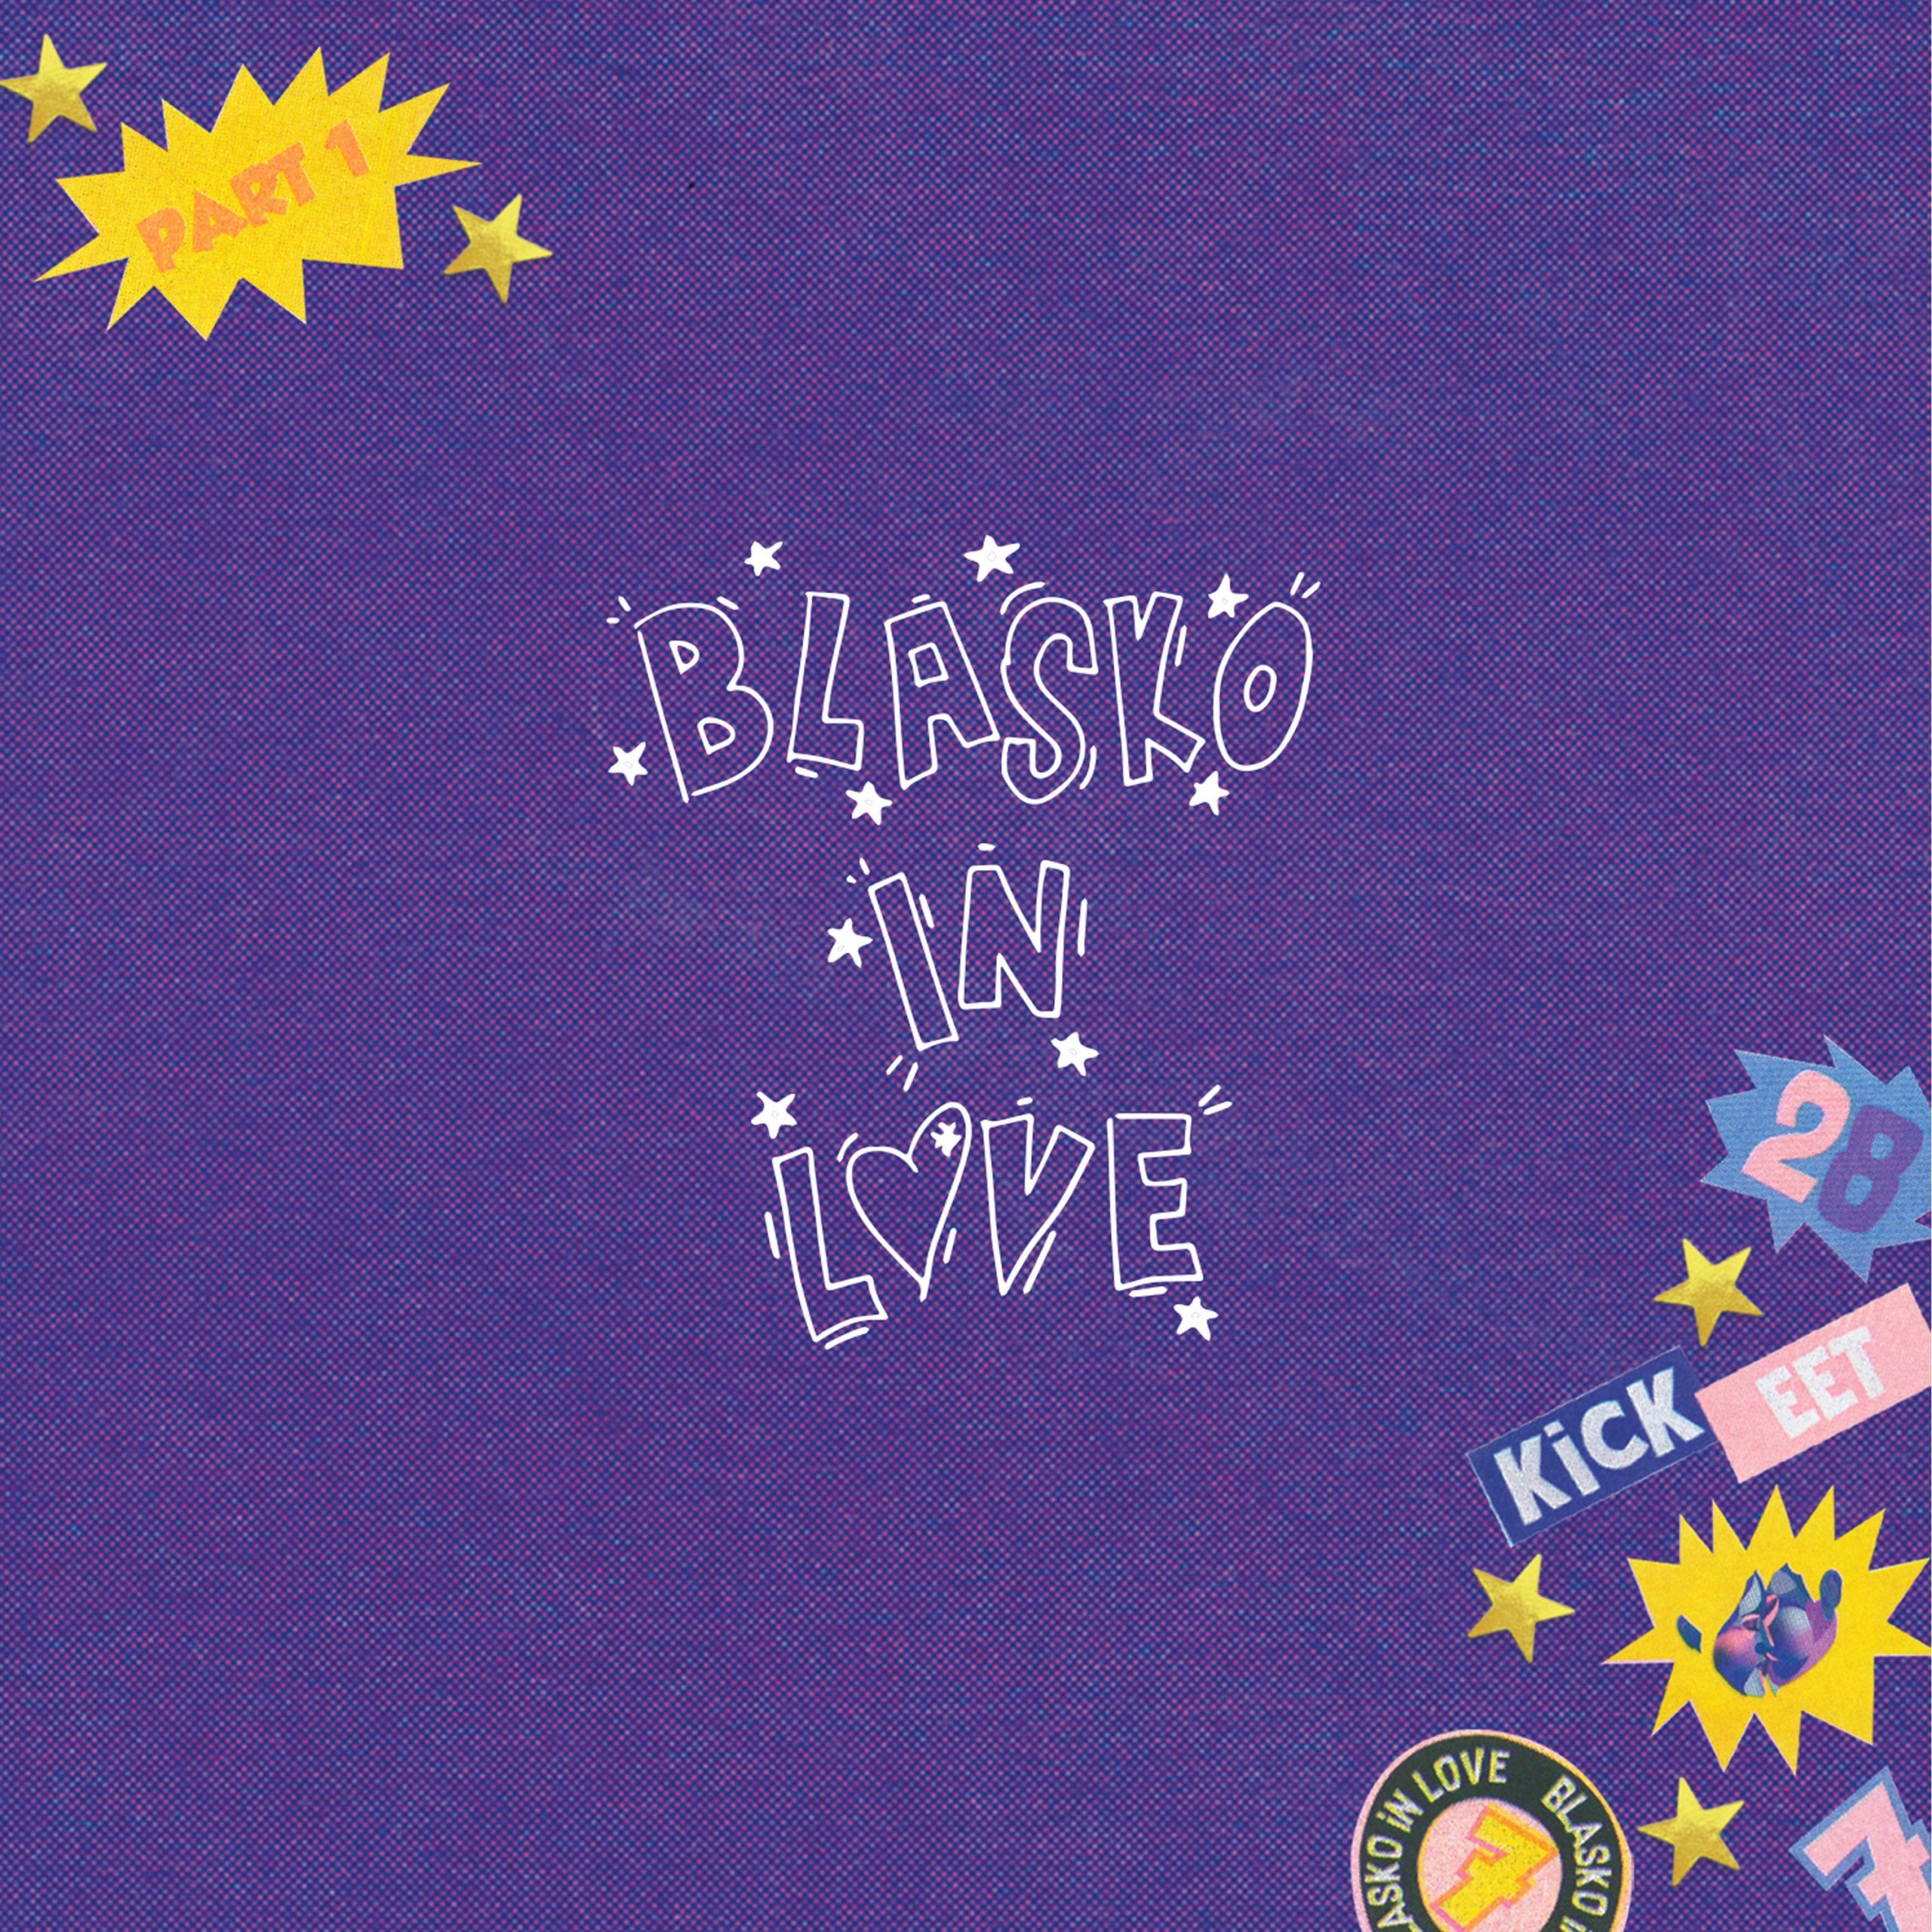 Blasko – “Future Love” Feat. T R Q S